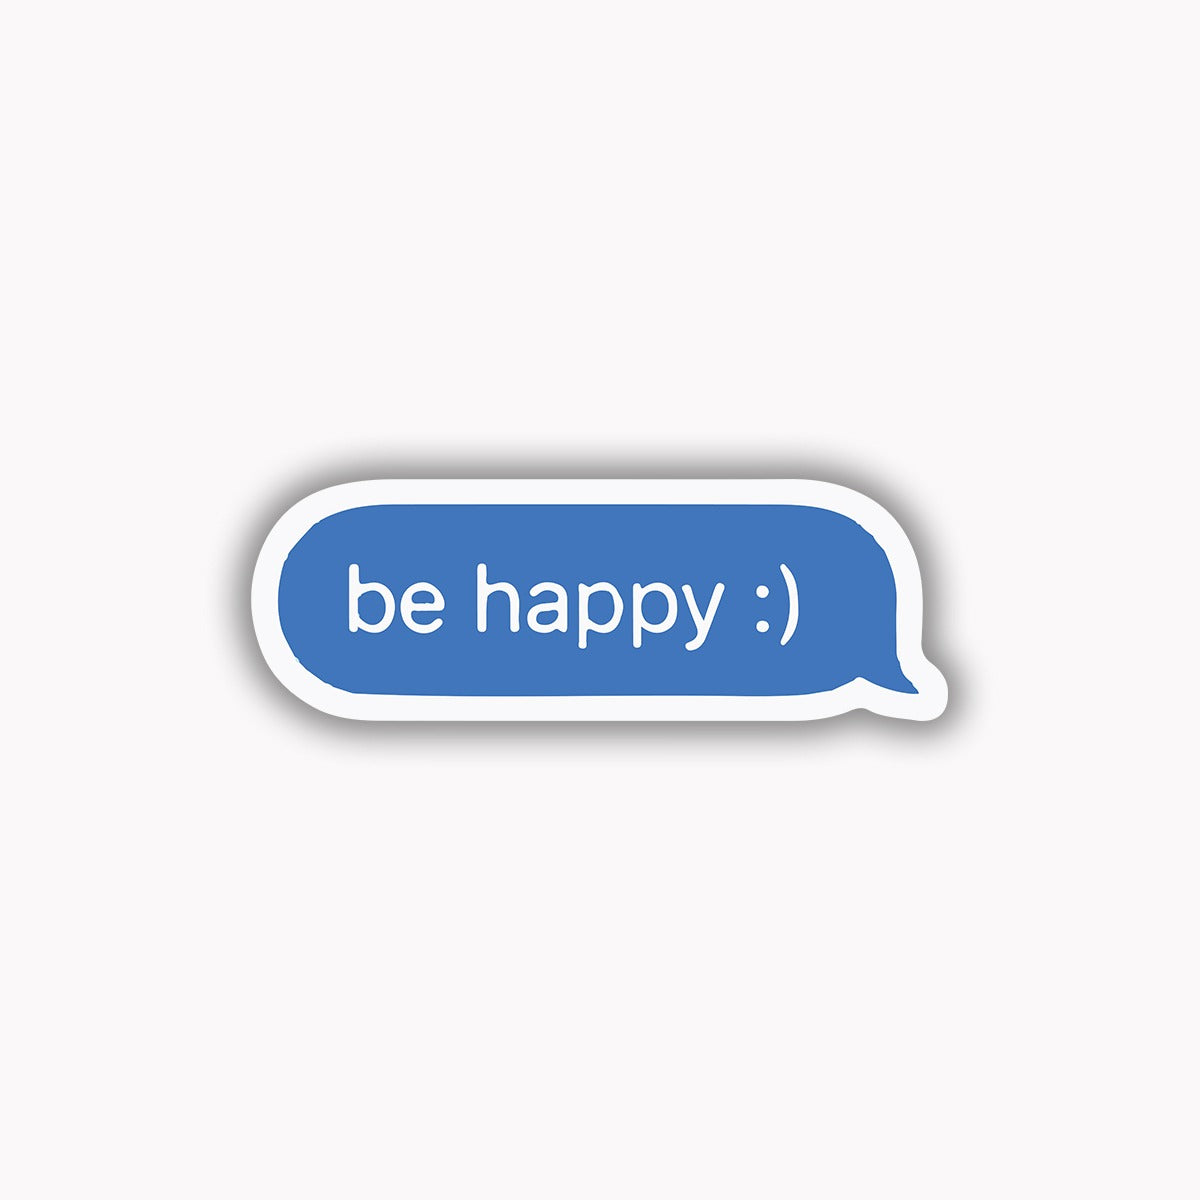 Be happy msg